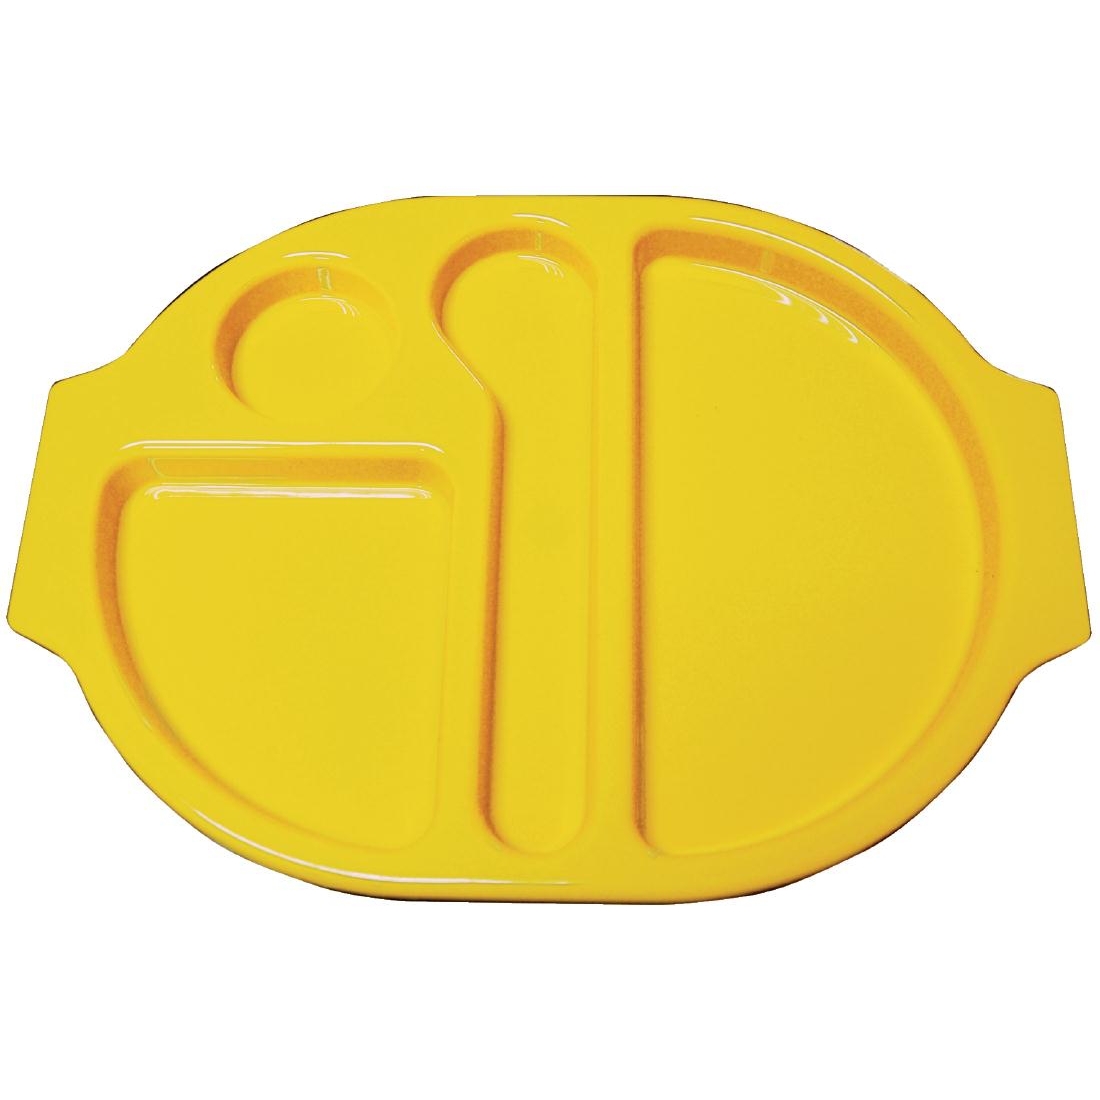 Kristallon Plastic Food Compartment Tray Small Yellow